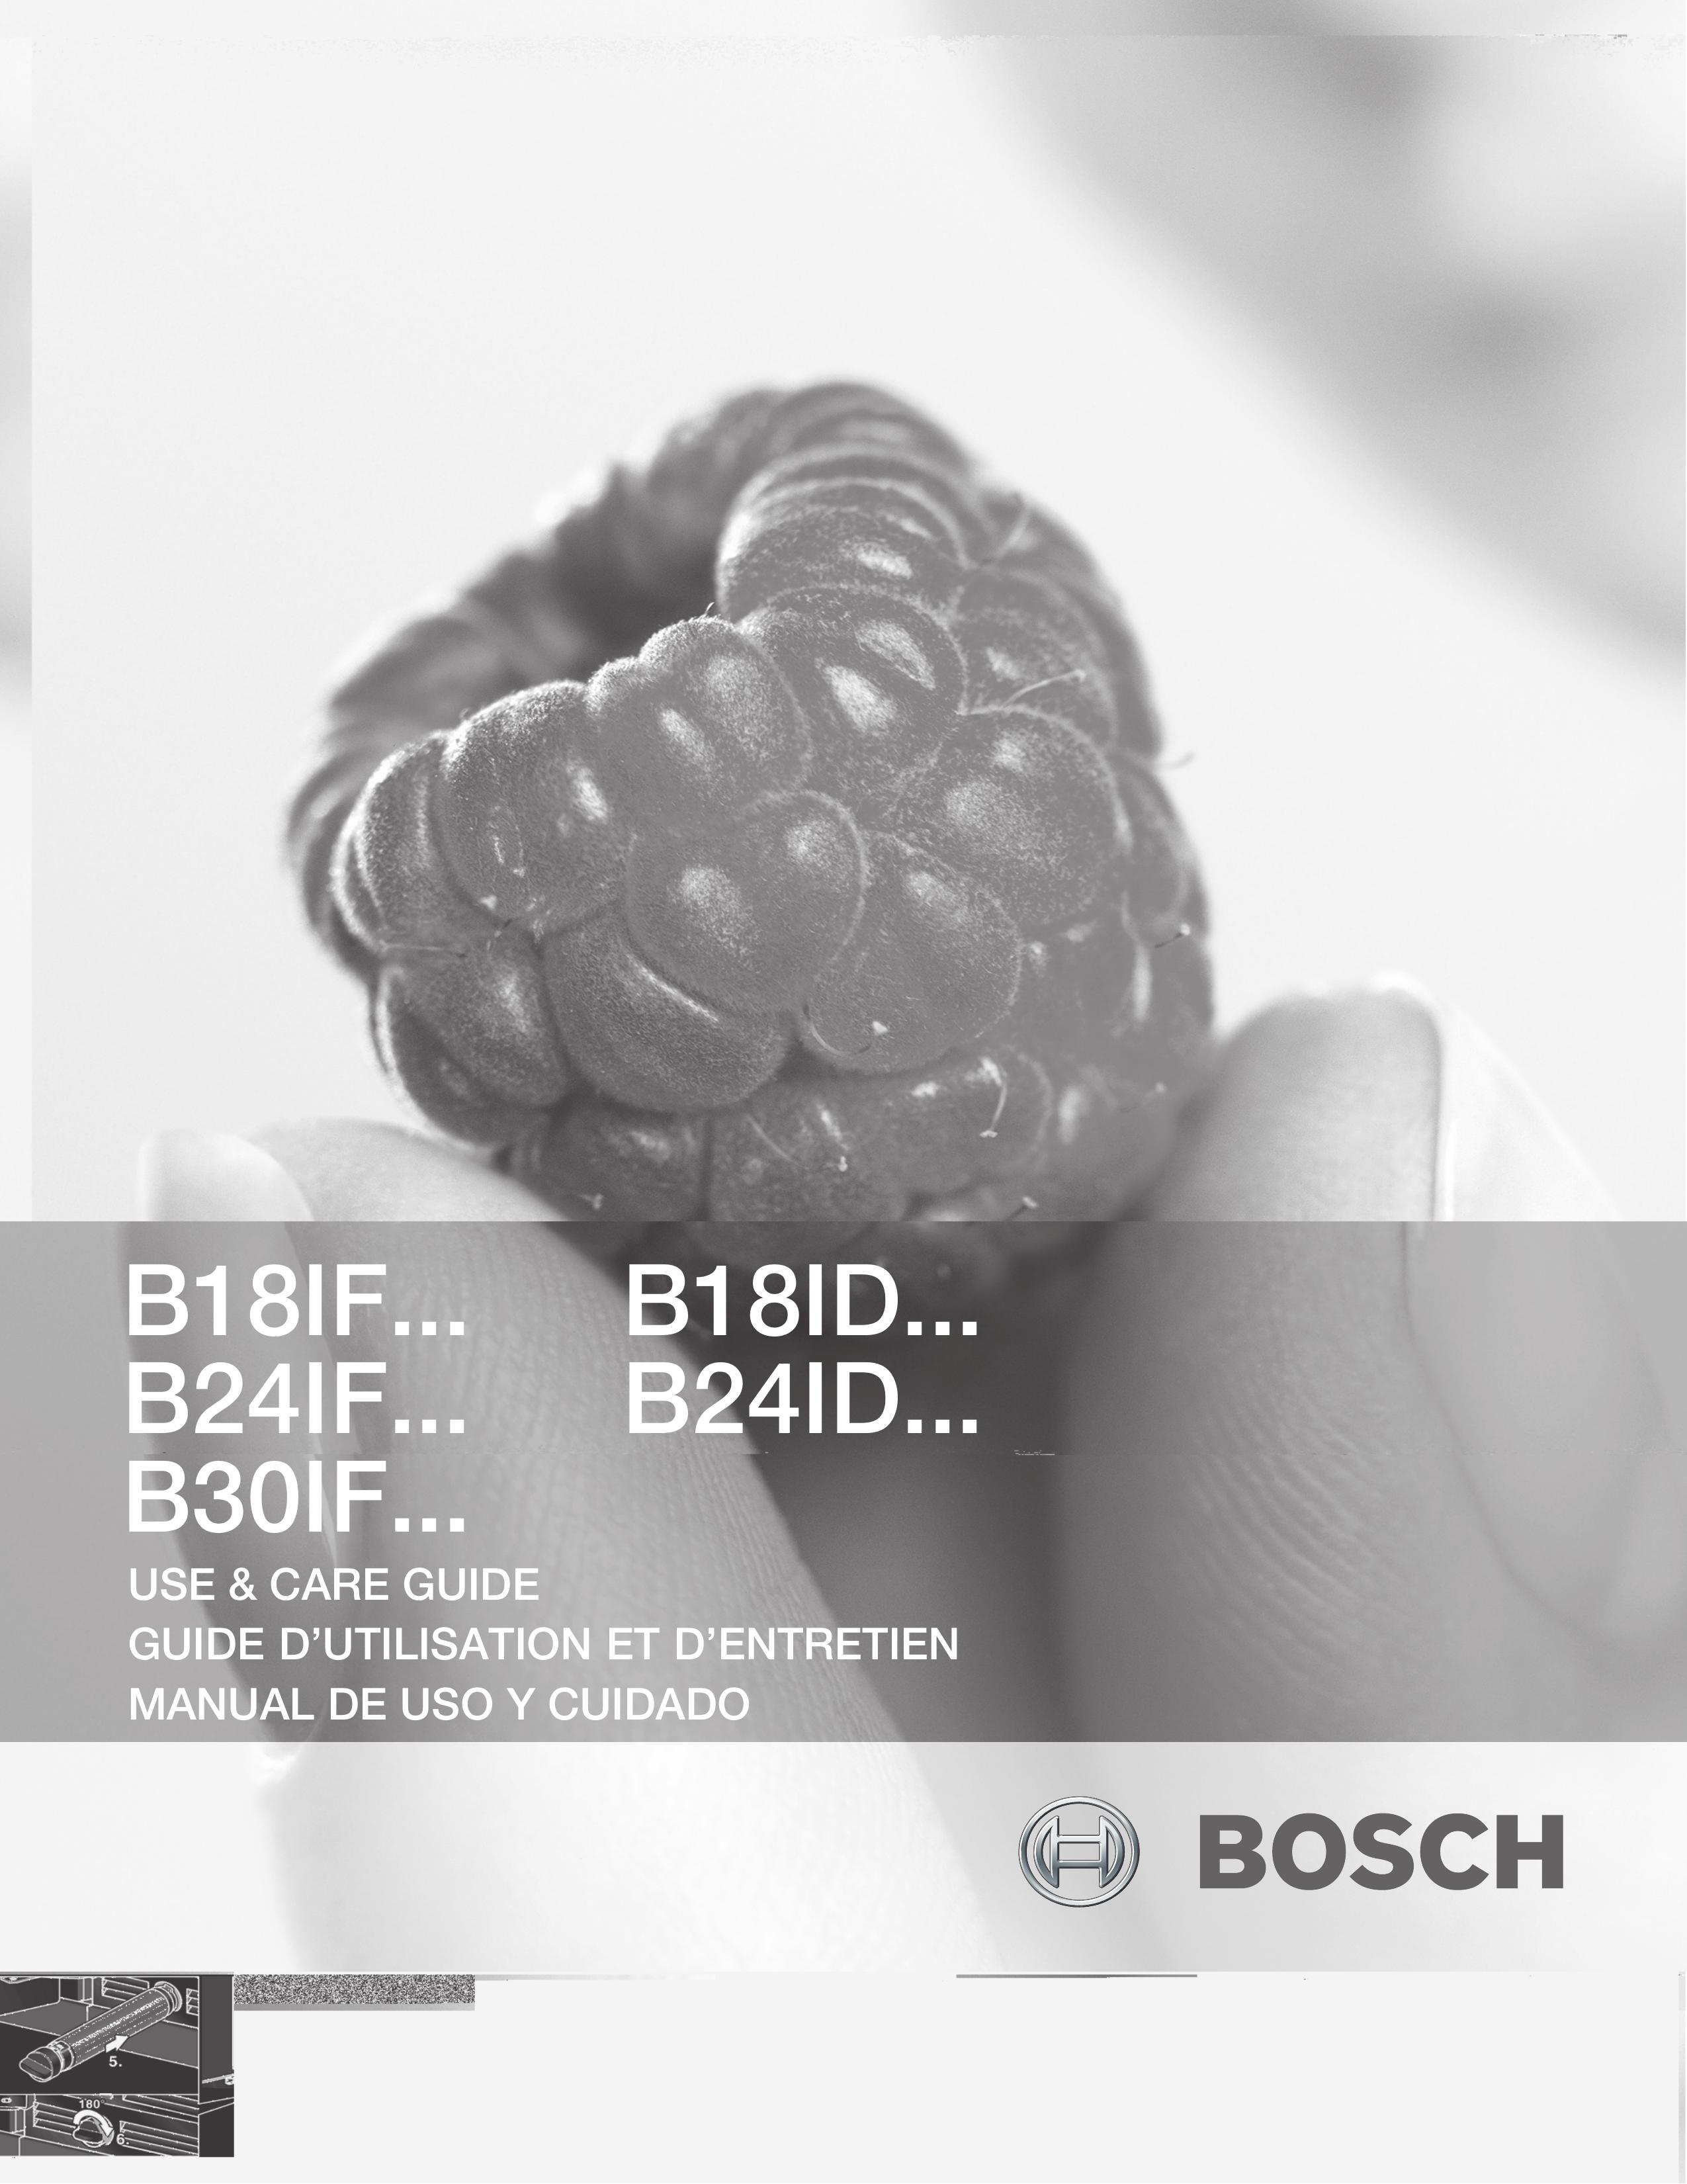 Bosch Appliances B30IF Refrigerator User Manual